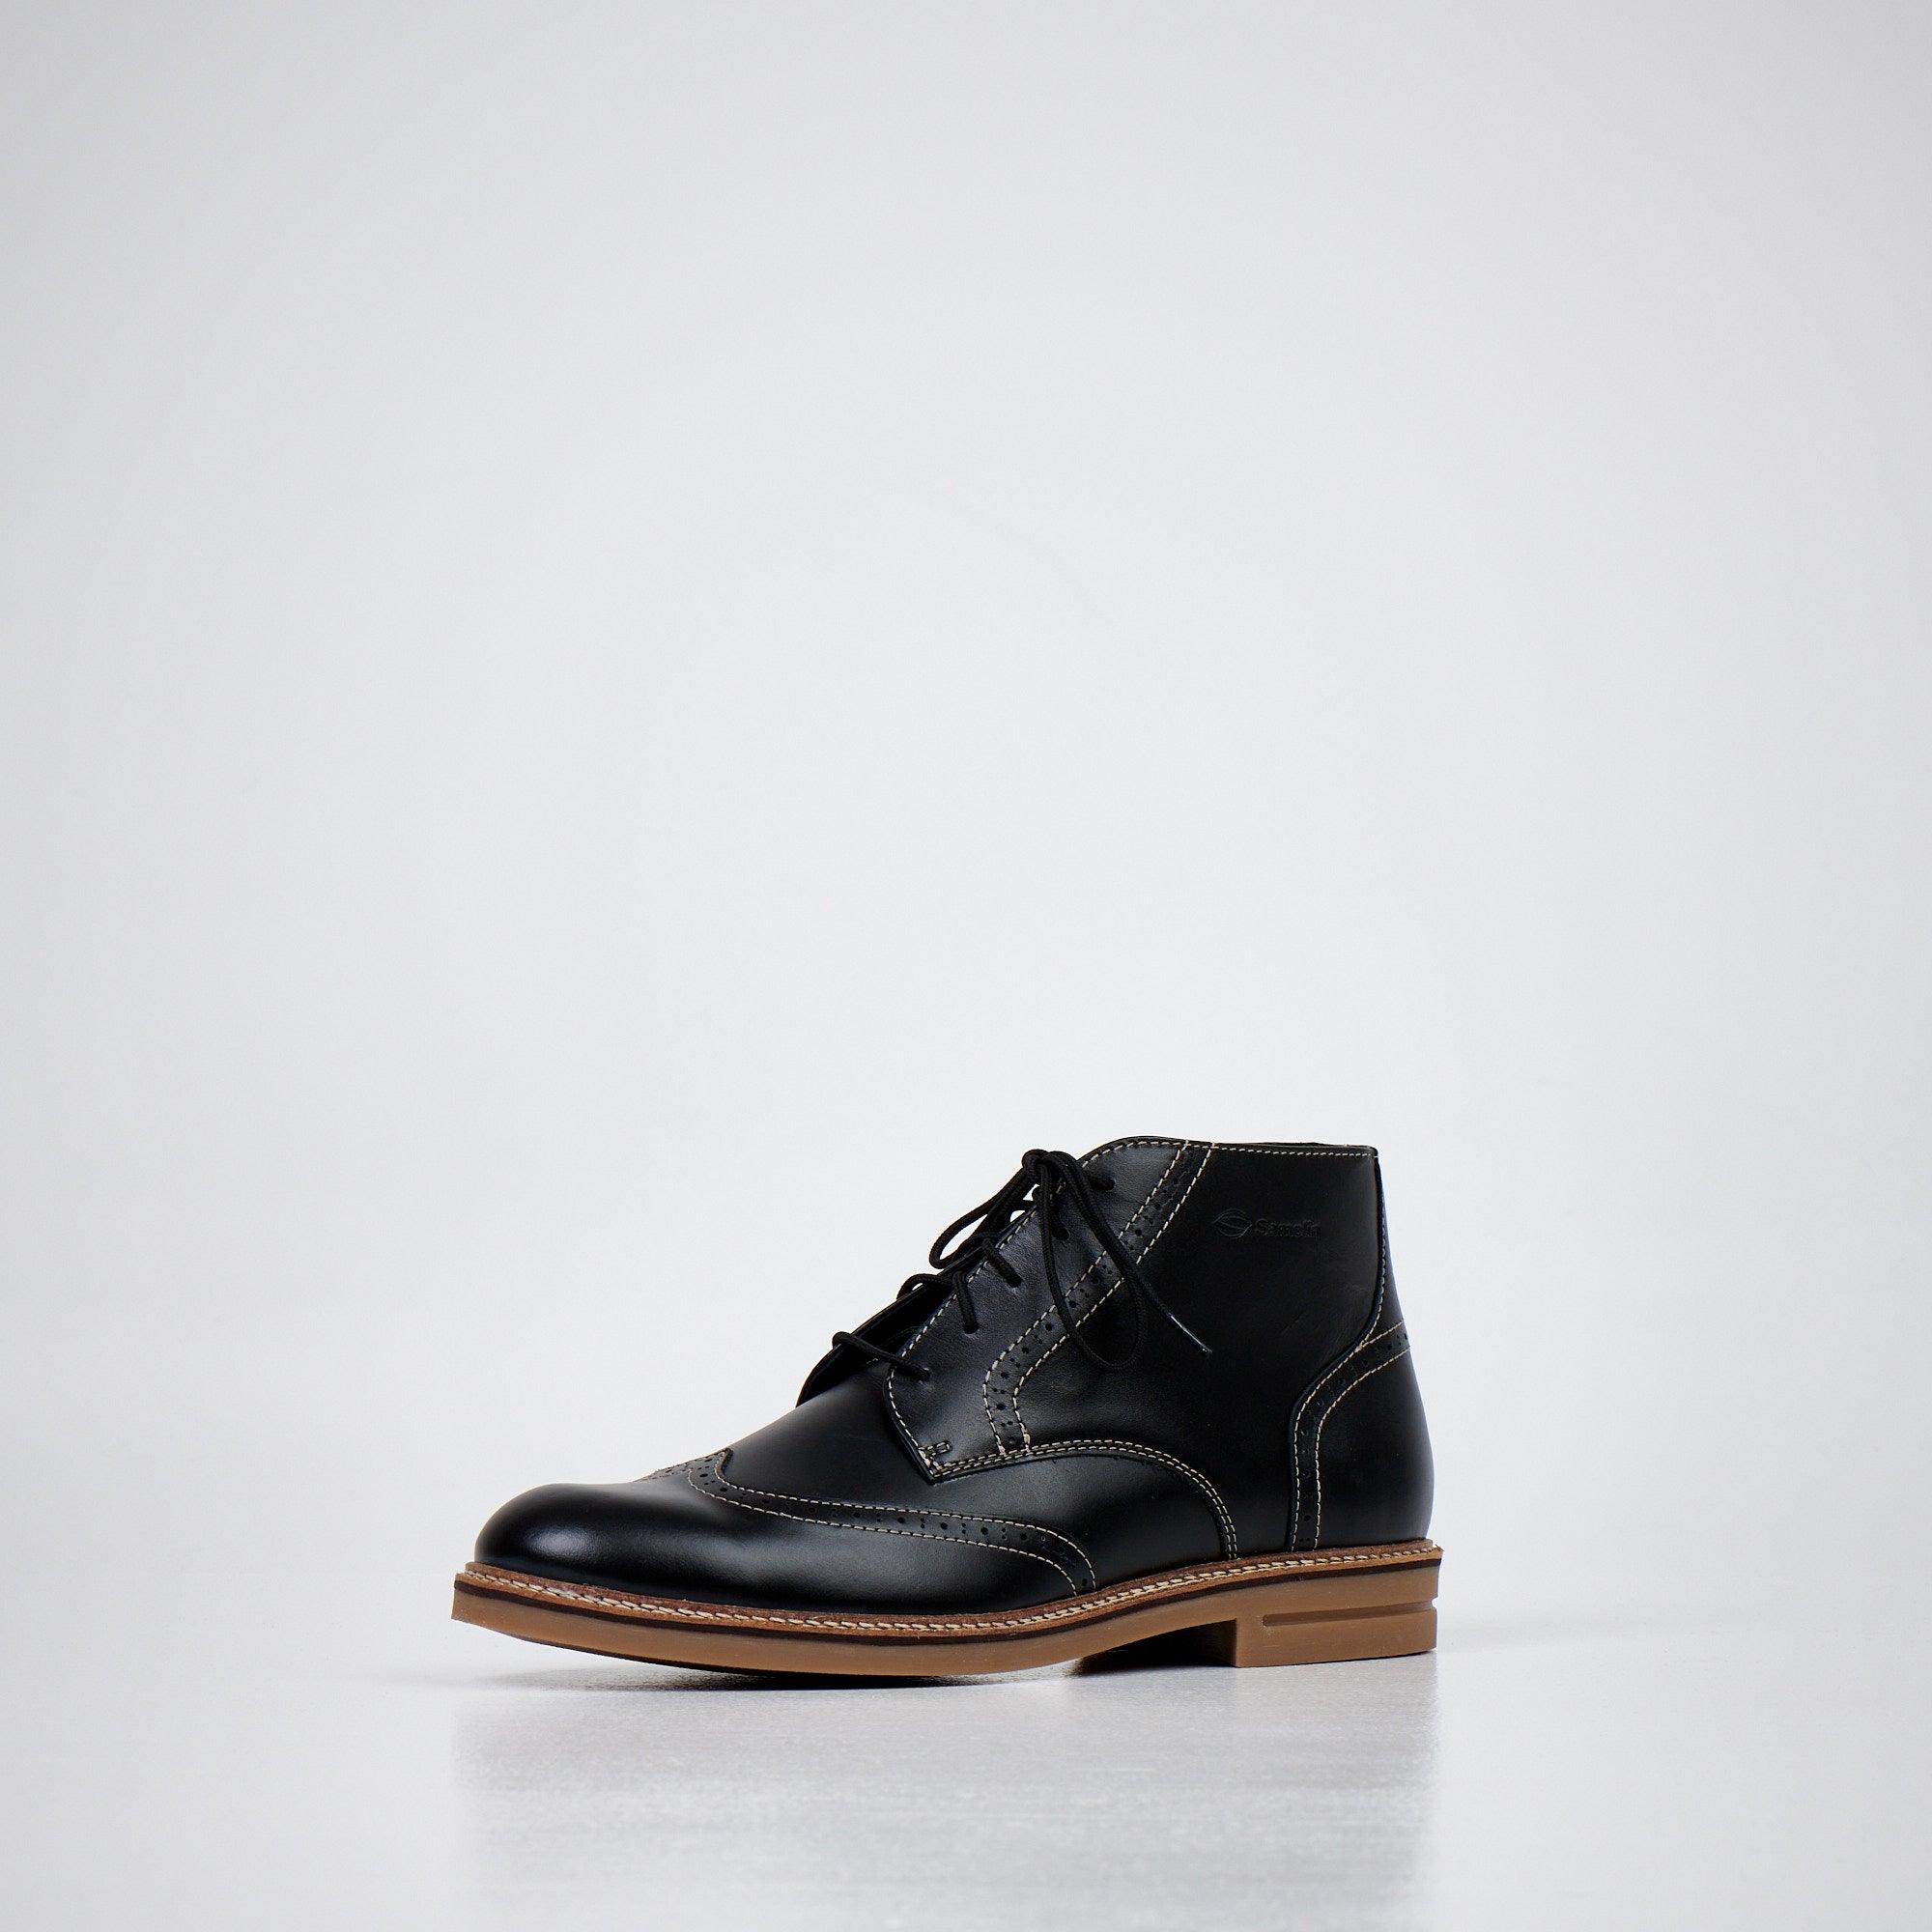 Black Ankle Boots 424 - RUUD Studios